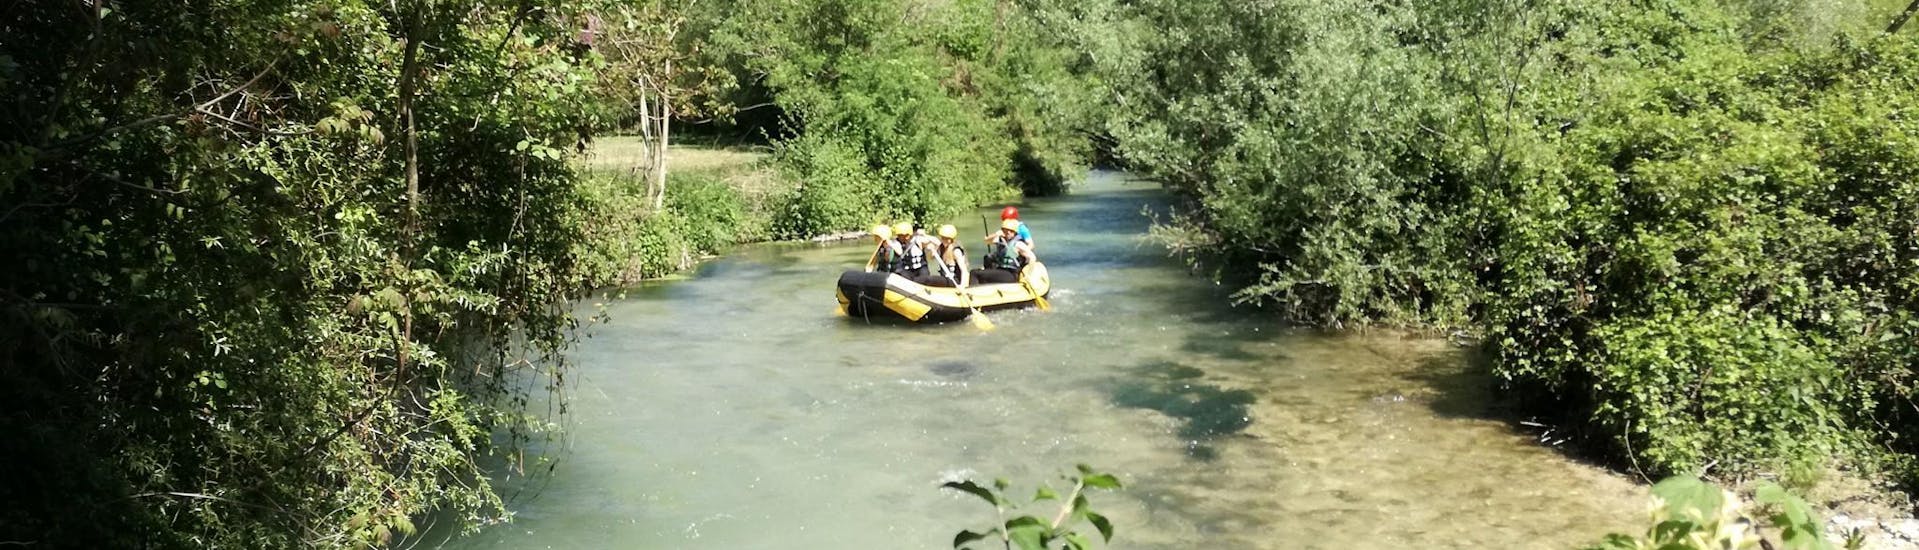 Rafting fácil en Vallo di Nera - Nera.